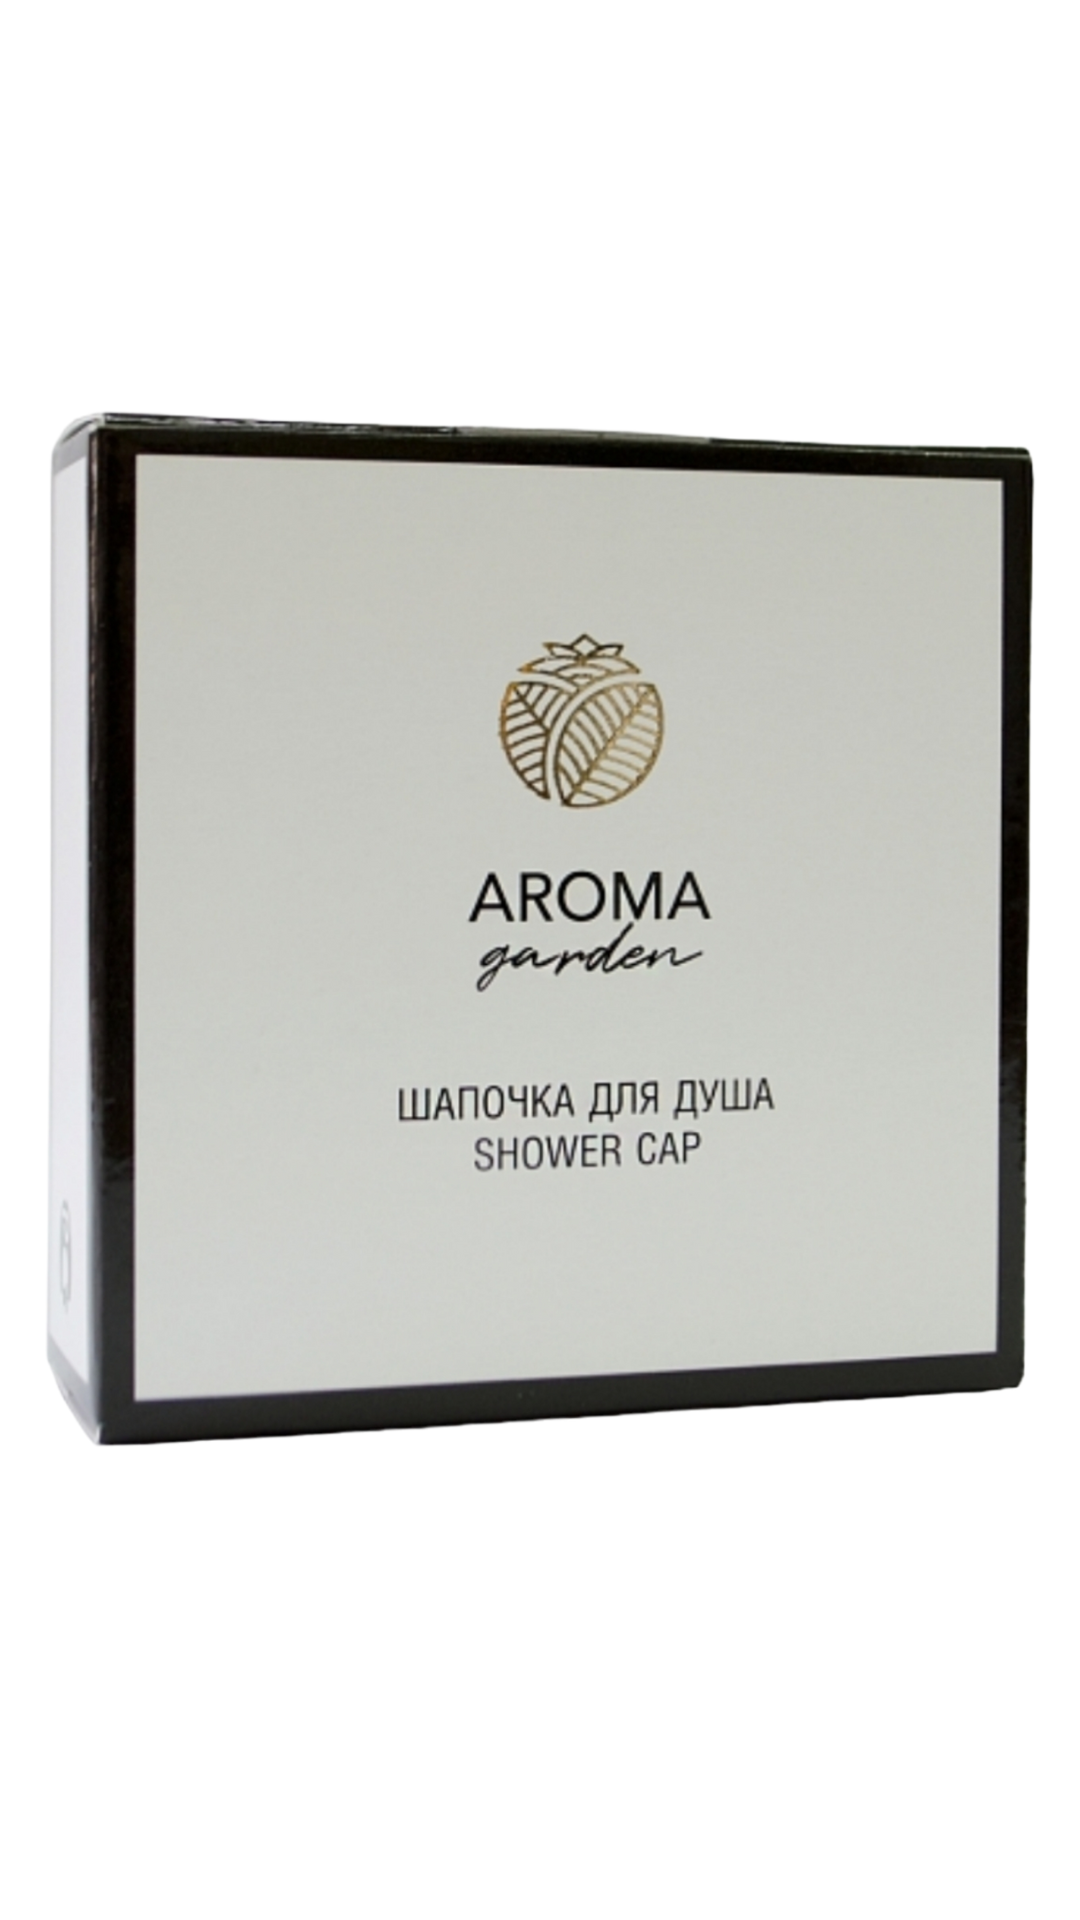 Шапочки для душа Aroma Garden картон 250 шт.